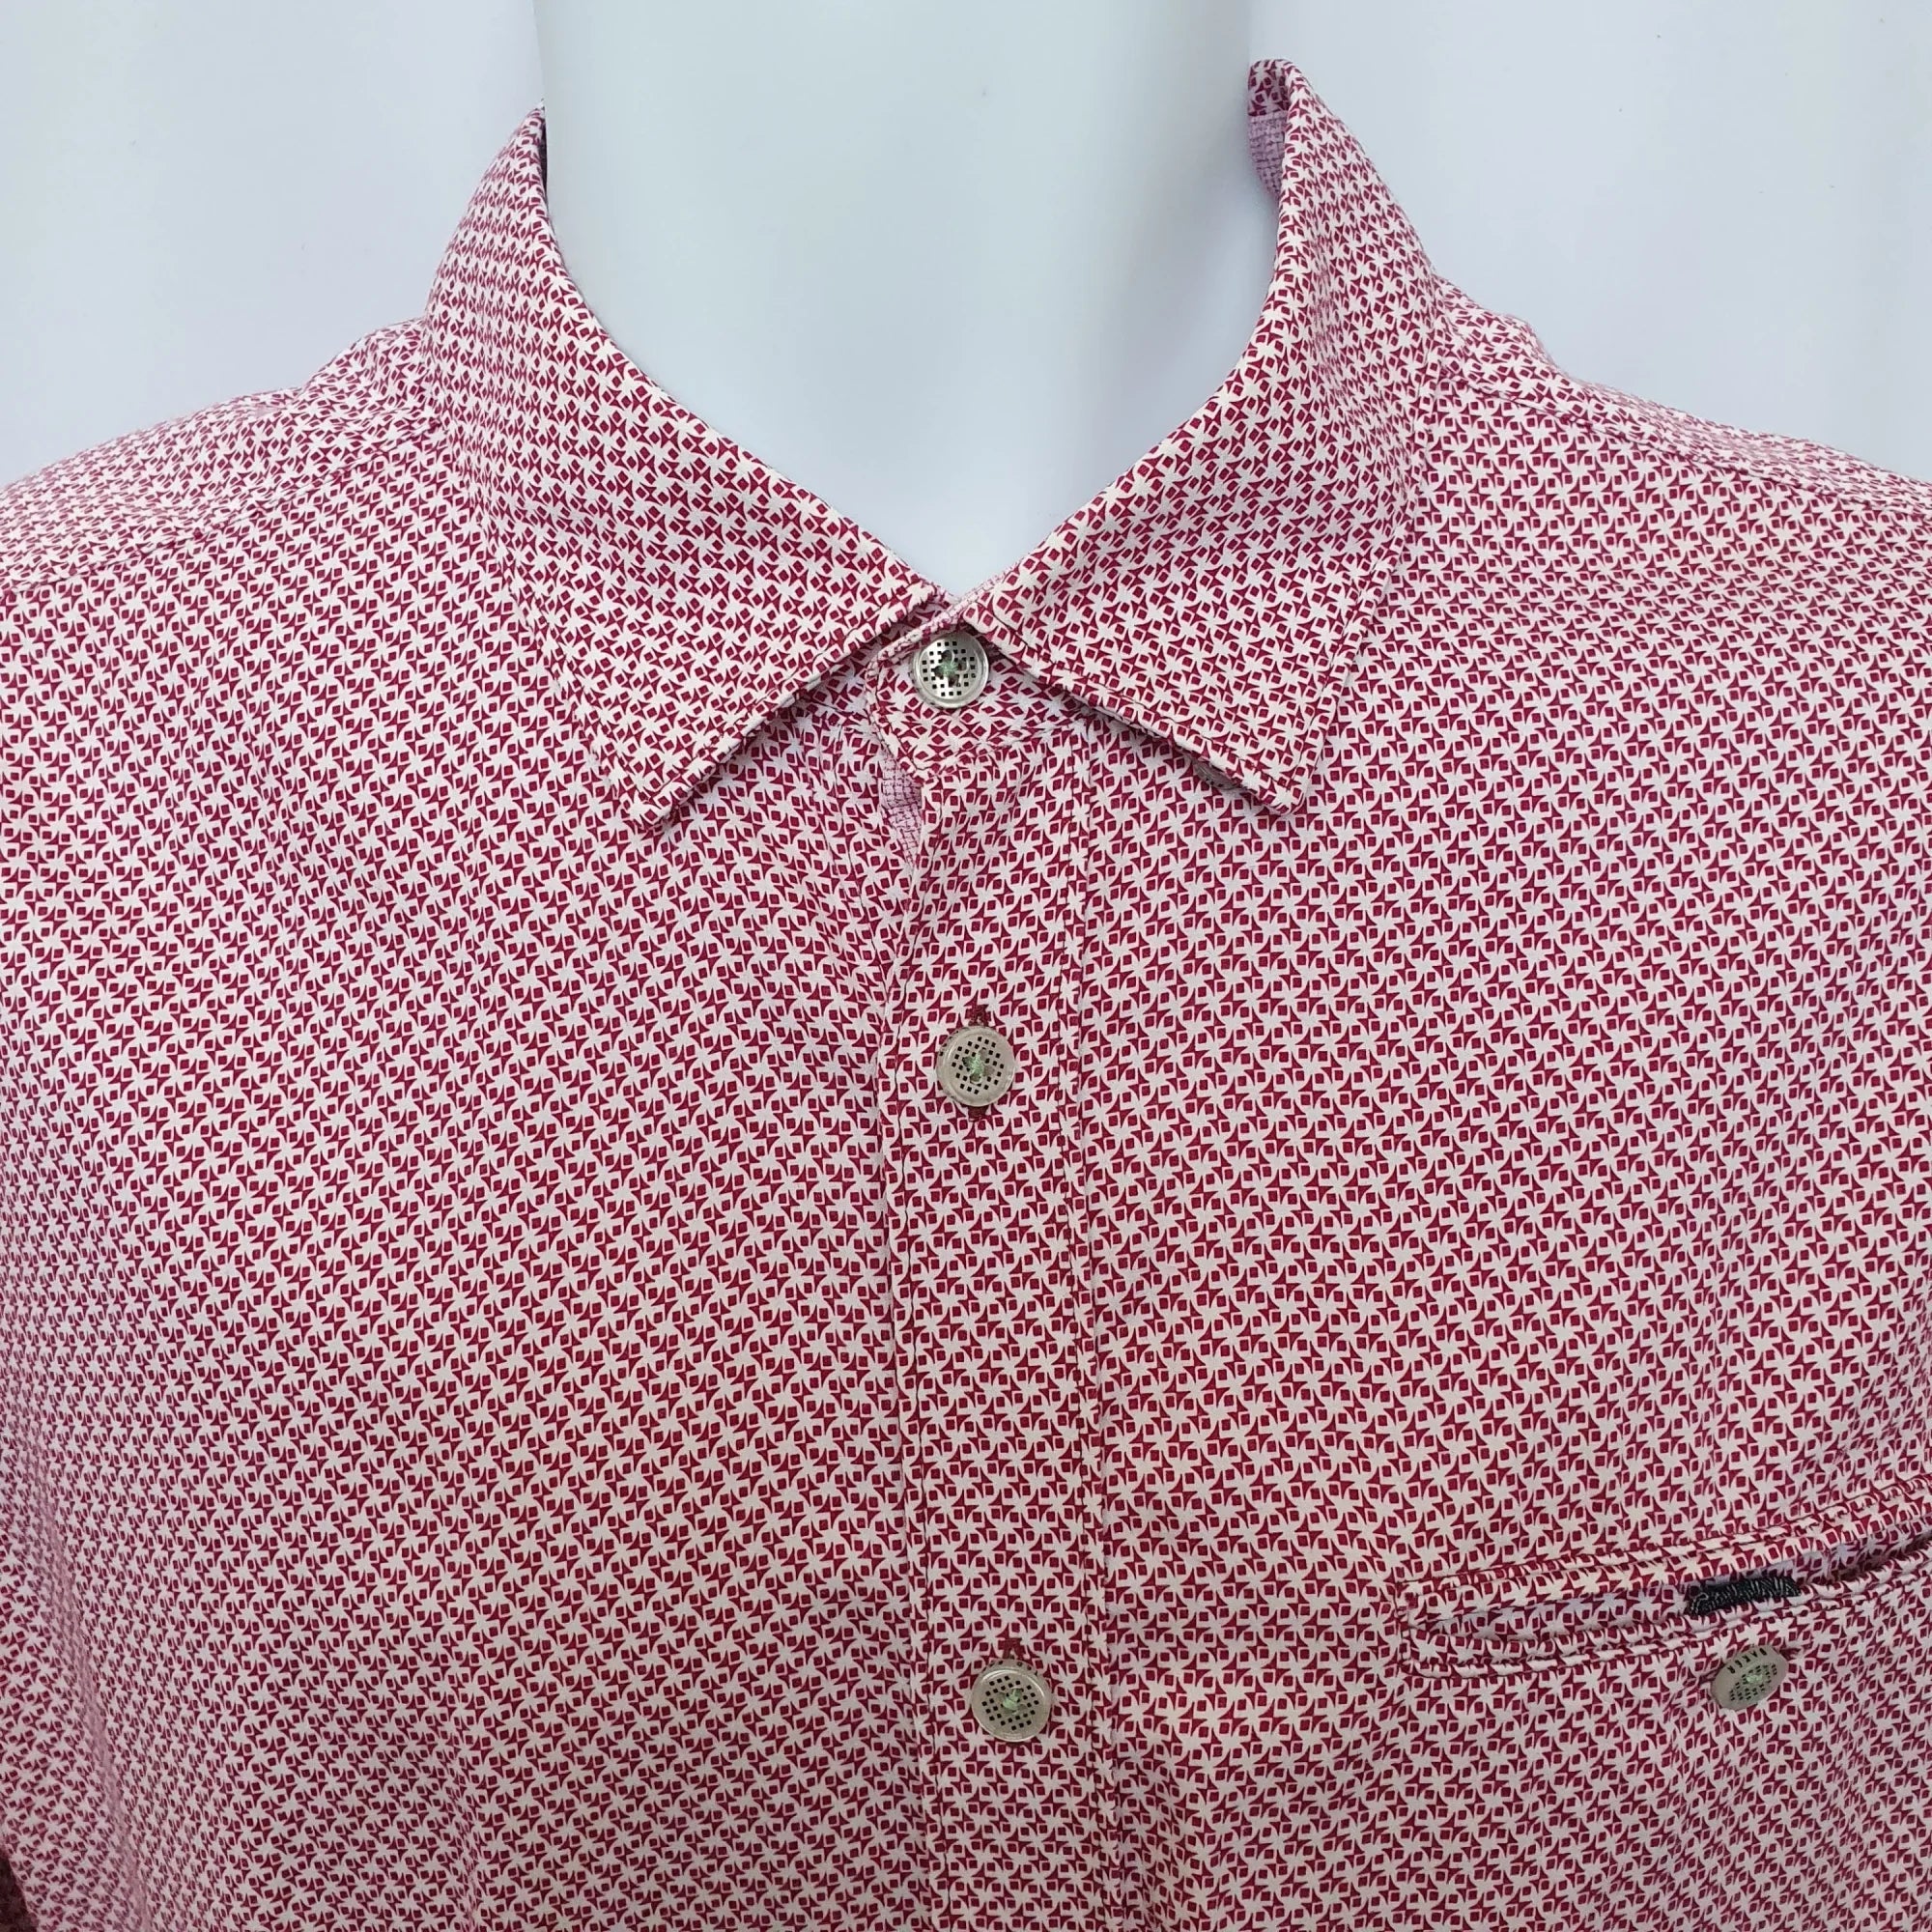 Ted Baker Mens XL Pink Patterned Long Sleeve Shirt - Smart